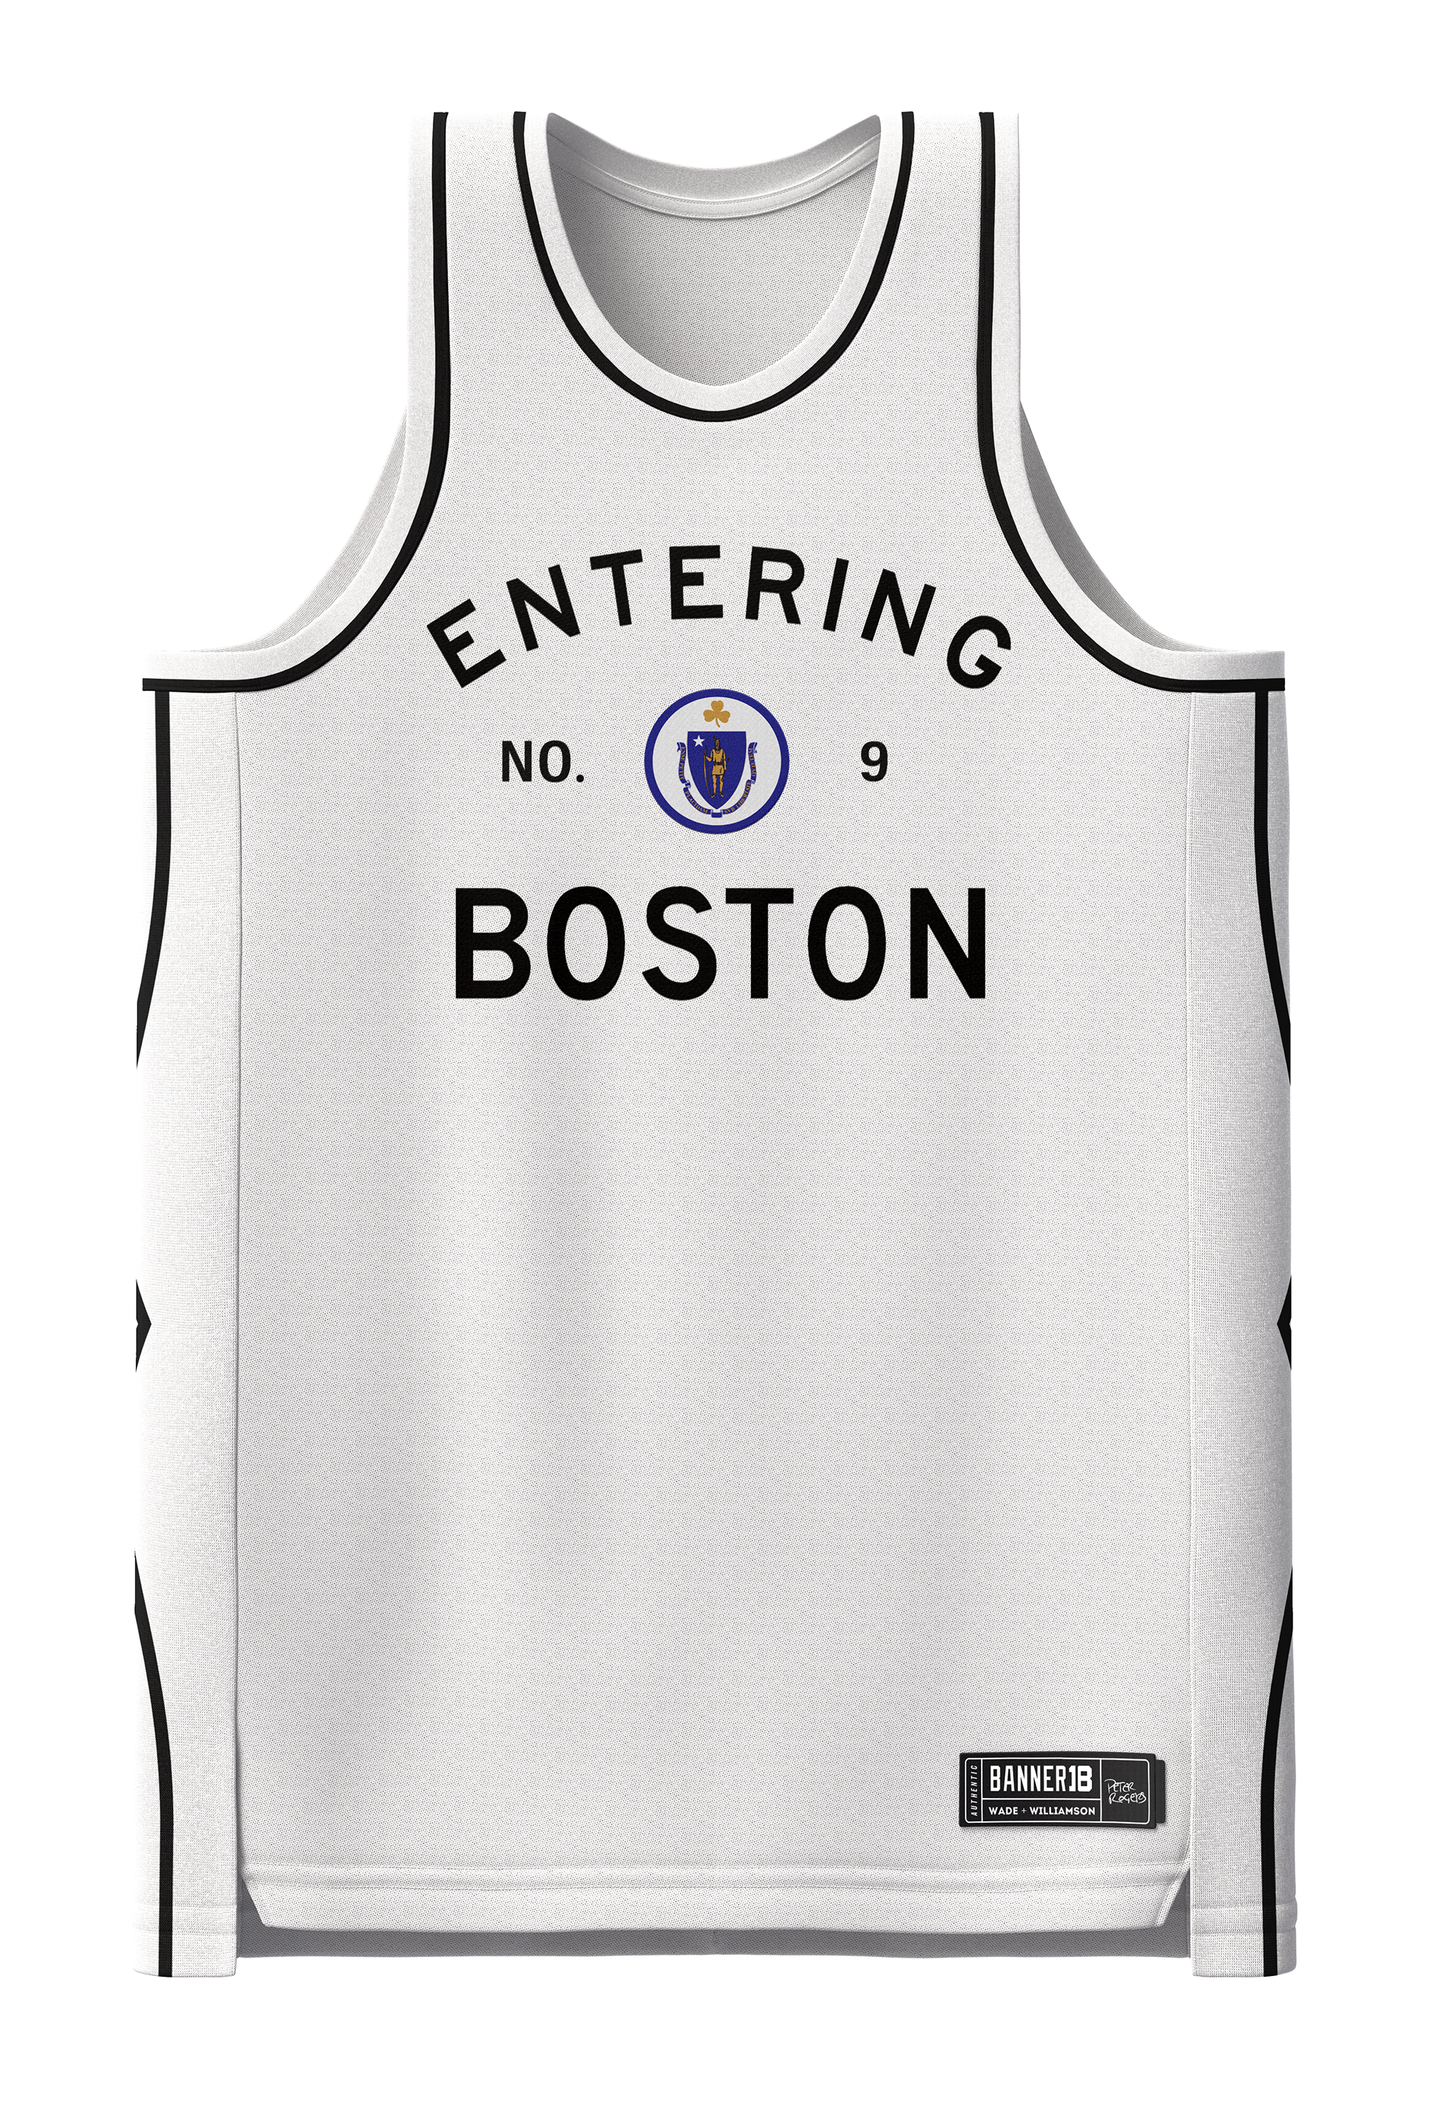 "Entering Boston" Jersey